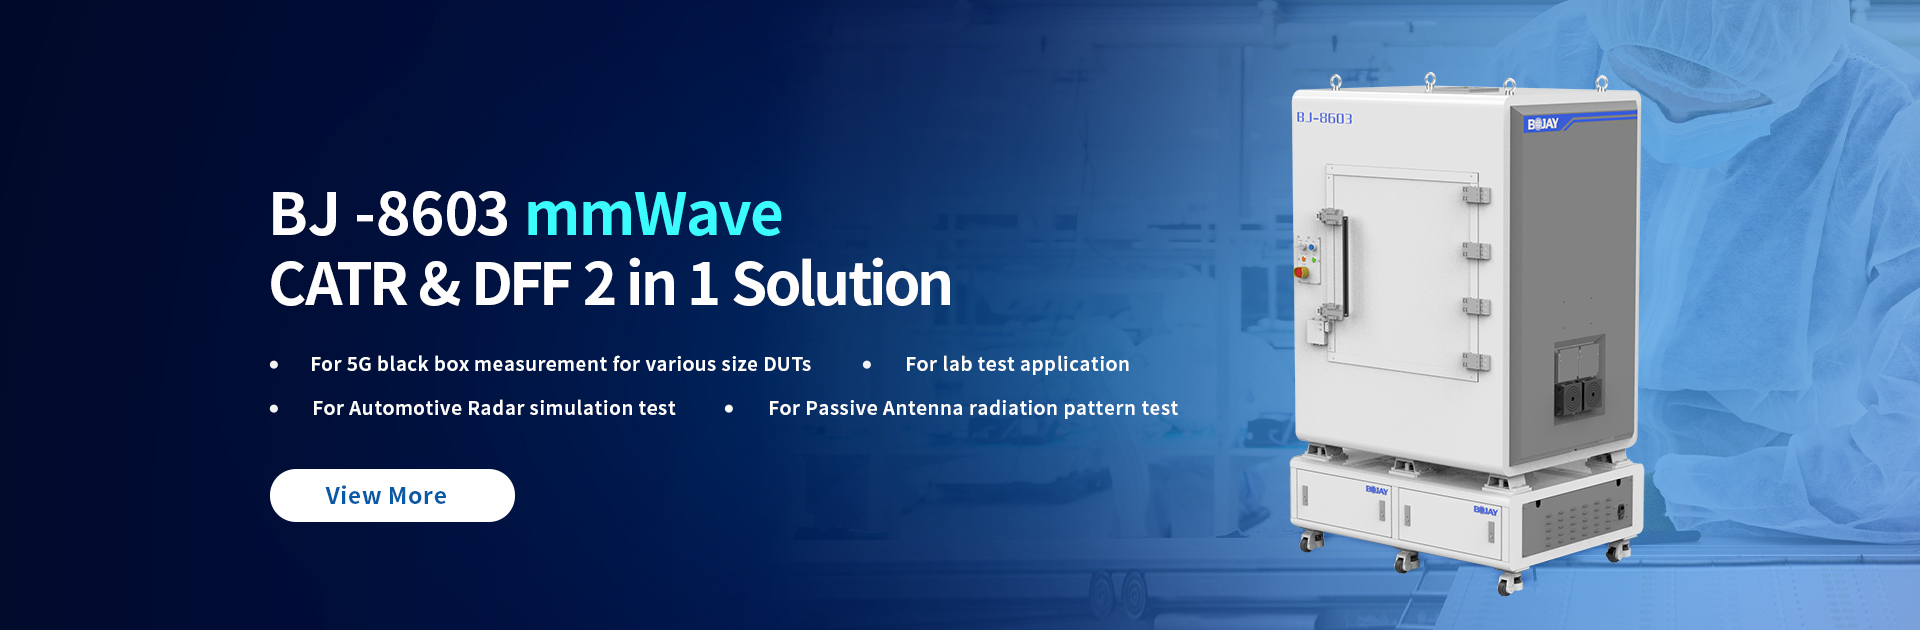 Bojay develops 5G MMwave CATR test solutions